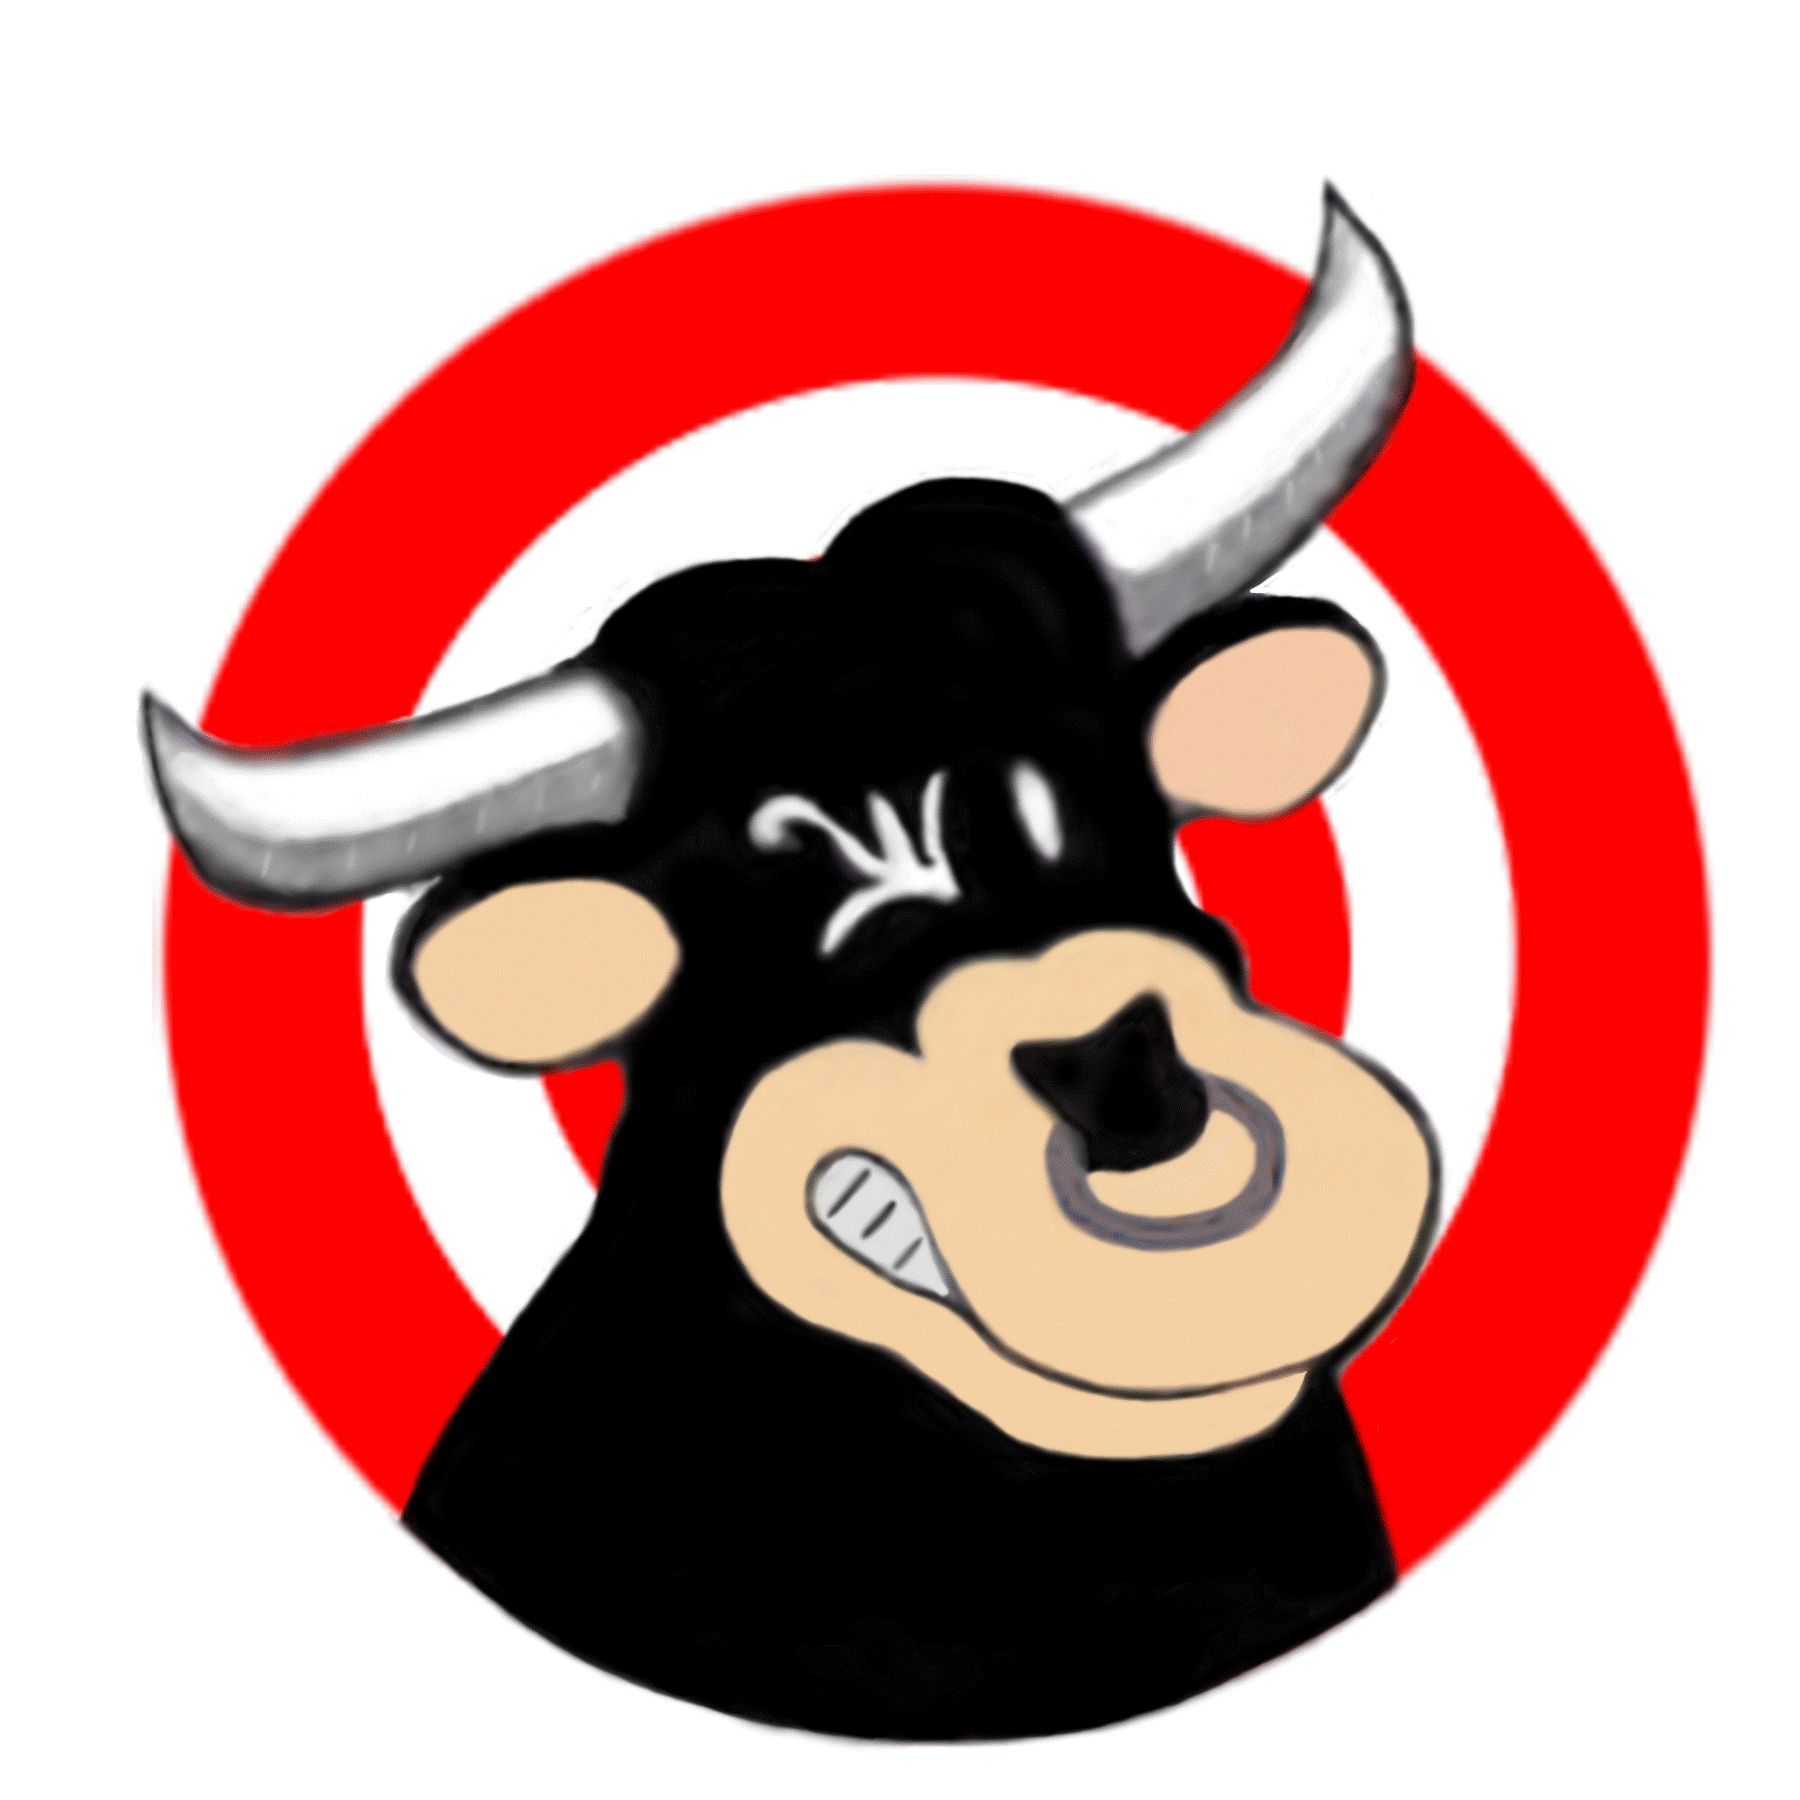 Arrow Bulls Eye Business Goal Dartboard Hit Target Icon - Free Icons